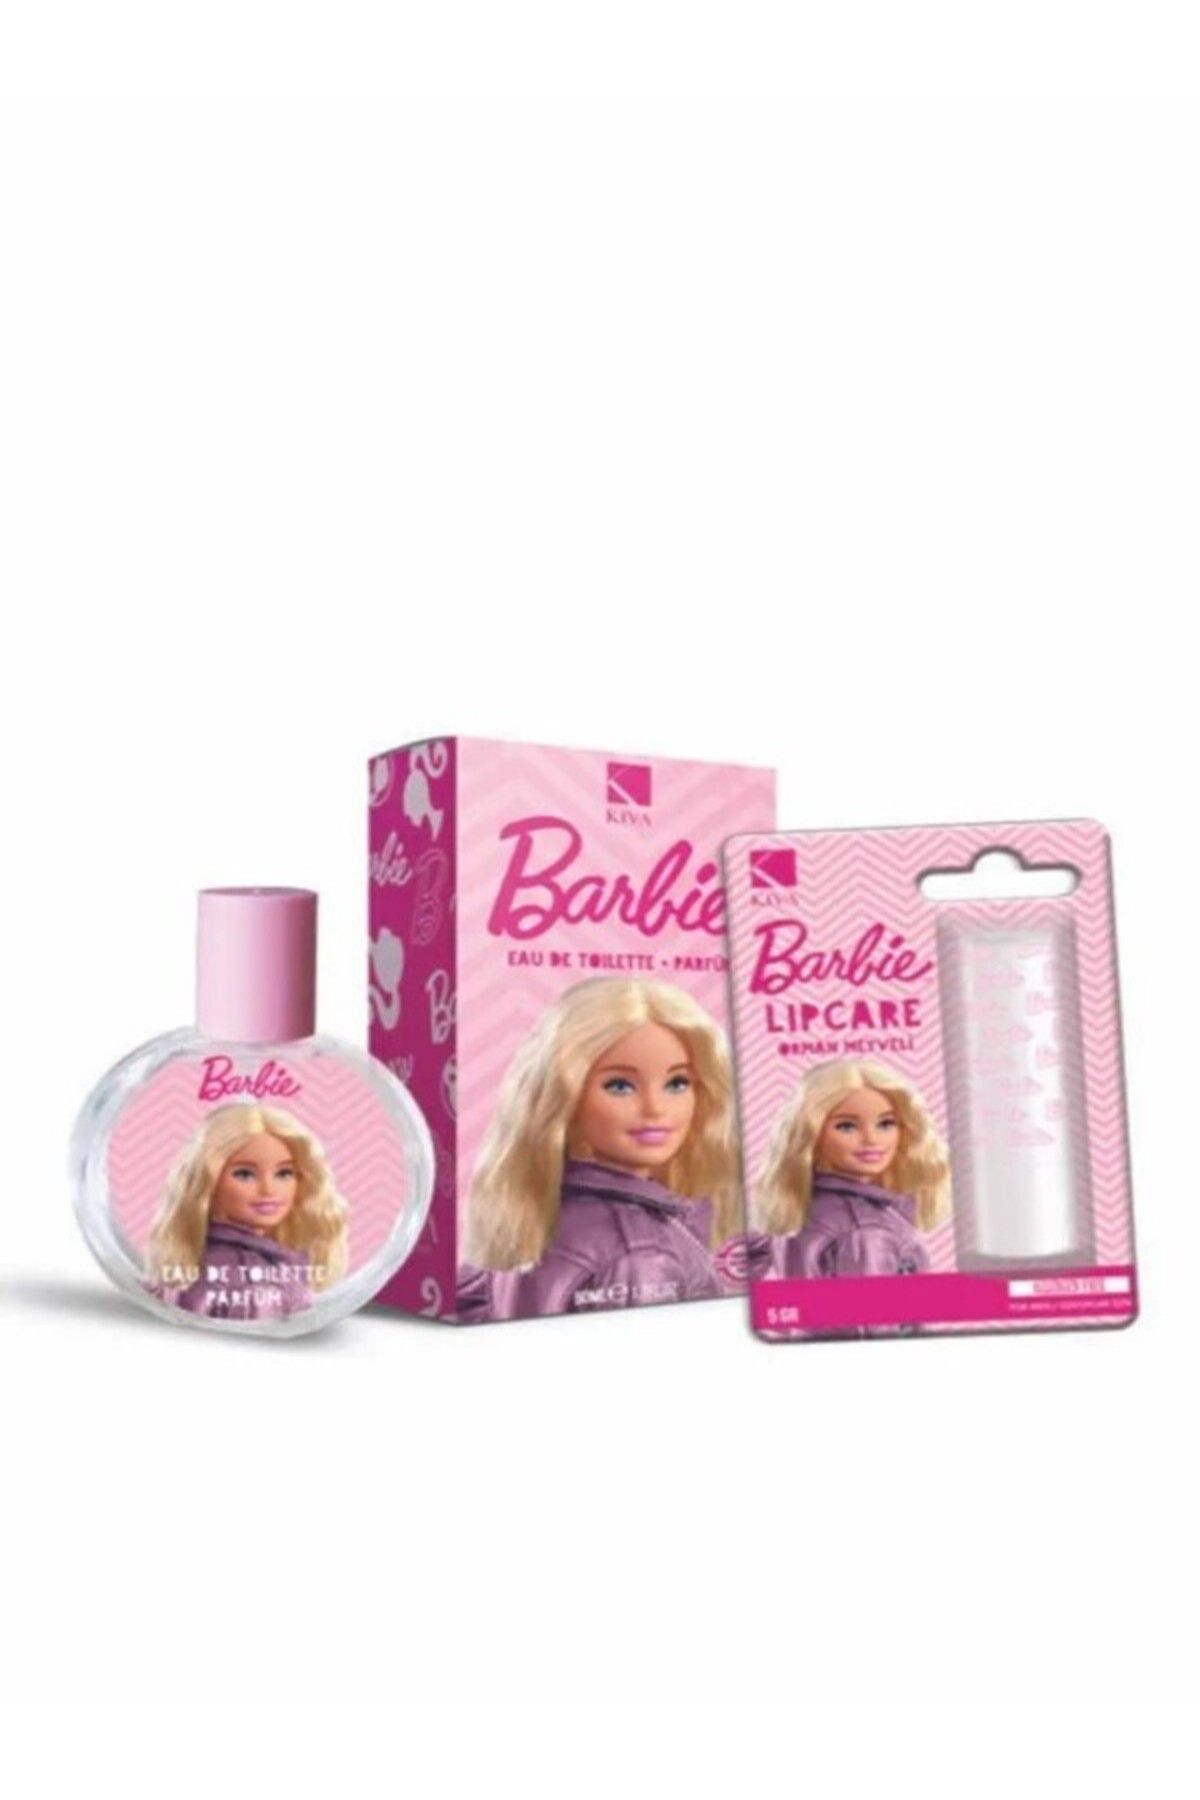 Barbie Disney Lisanslı Parfüm& Lipcare Seti 50 ml Çocuk Parfüm Seti 757898244